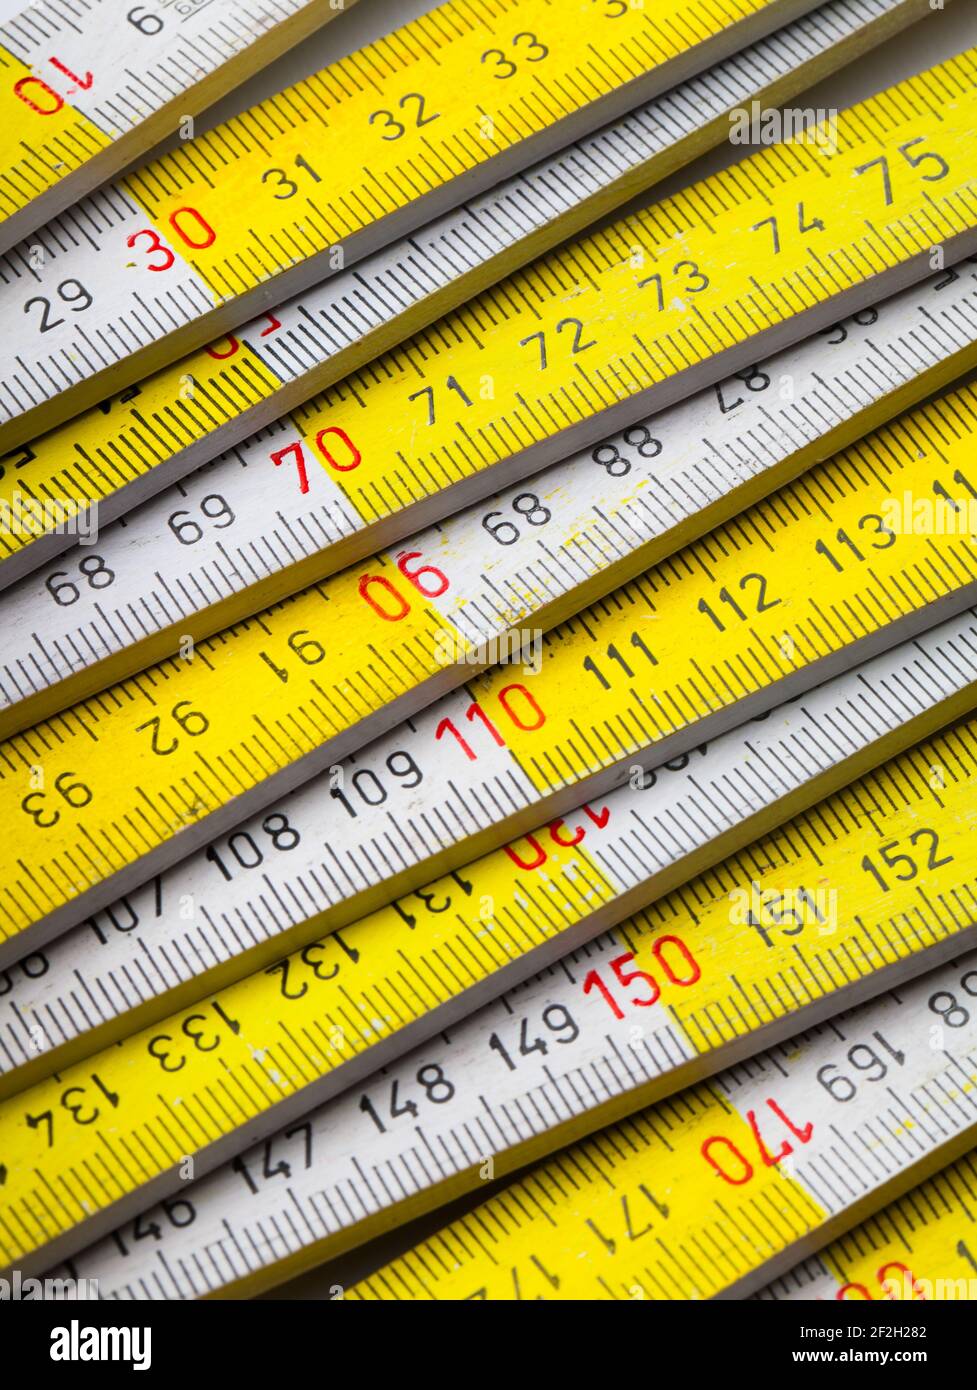 orthodontic metric scale ruler